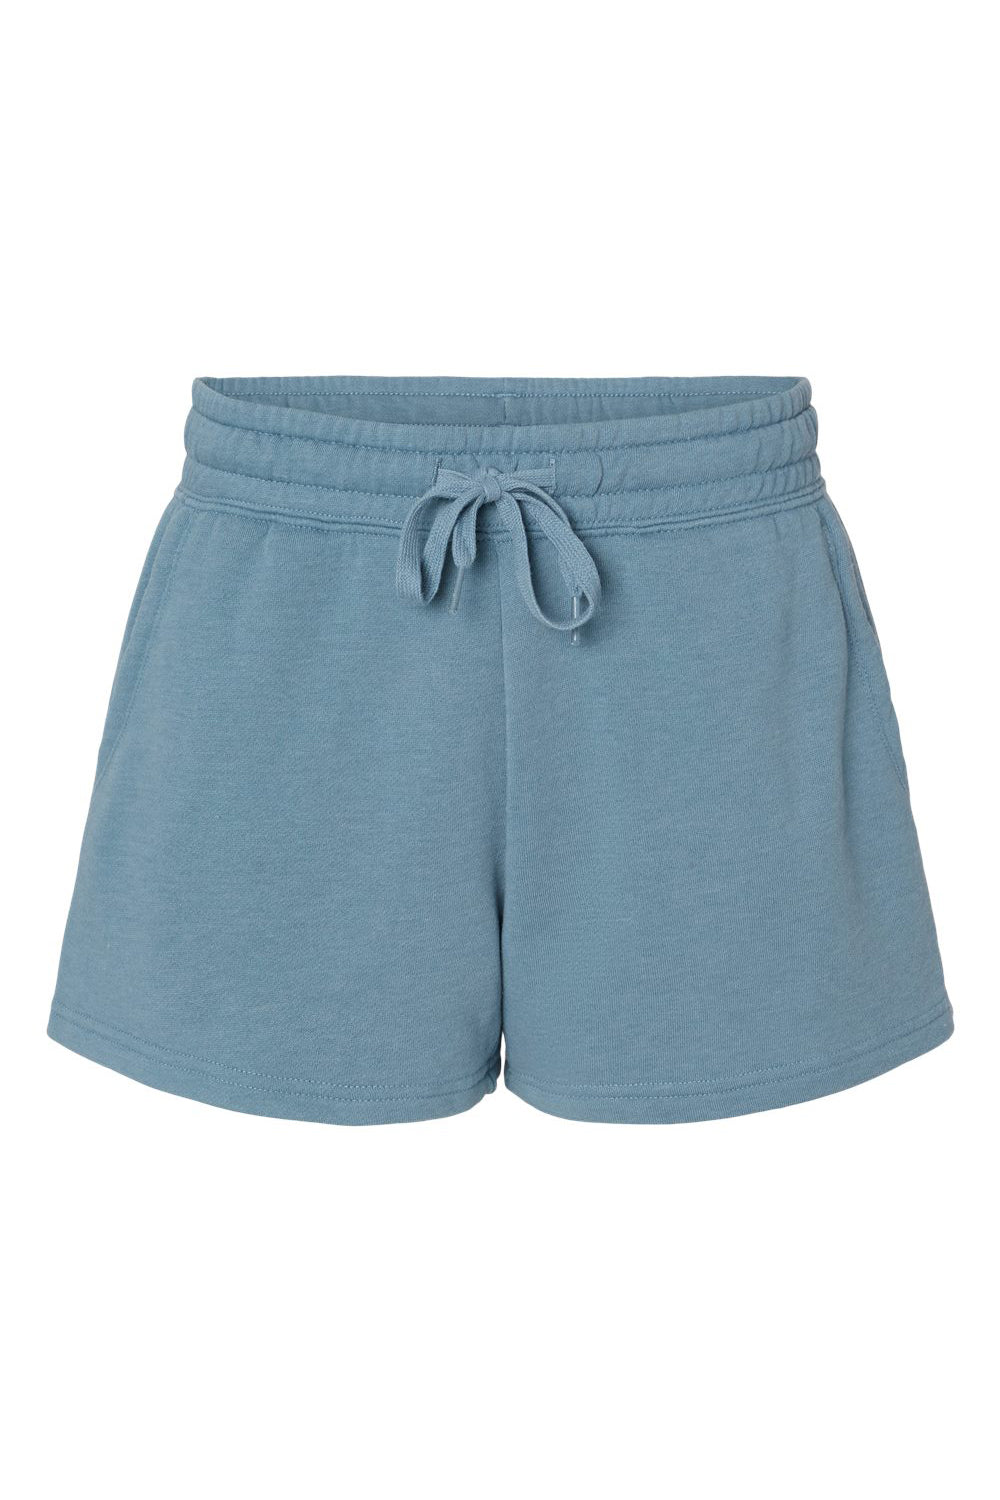 Independent Trading Co. PRM20SRT Womens California Wave Wash Fleece Shorts w/ Pockets Misty Blue Flat Front